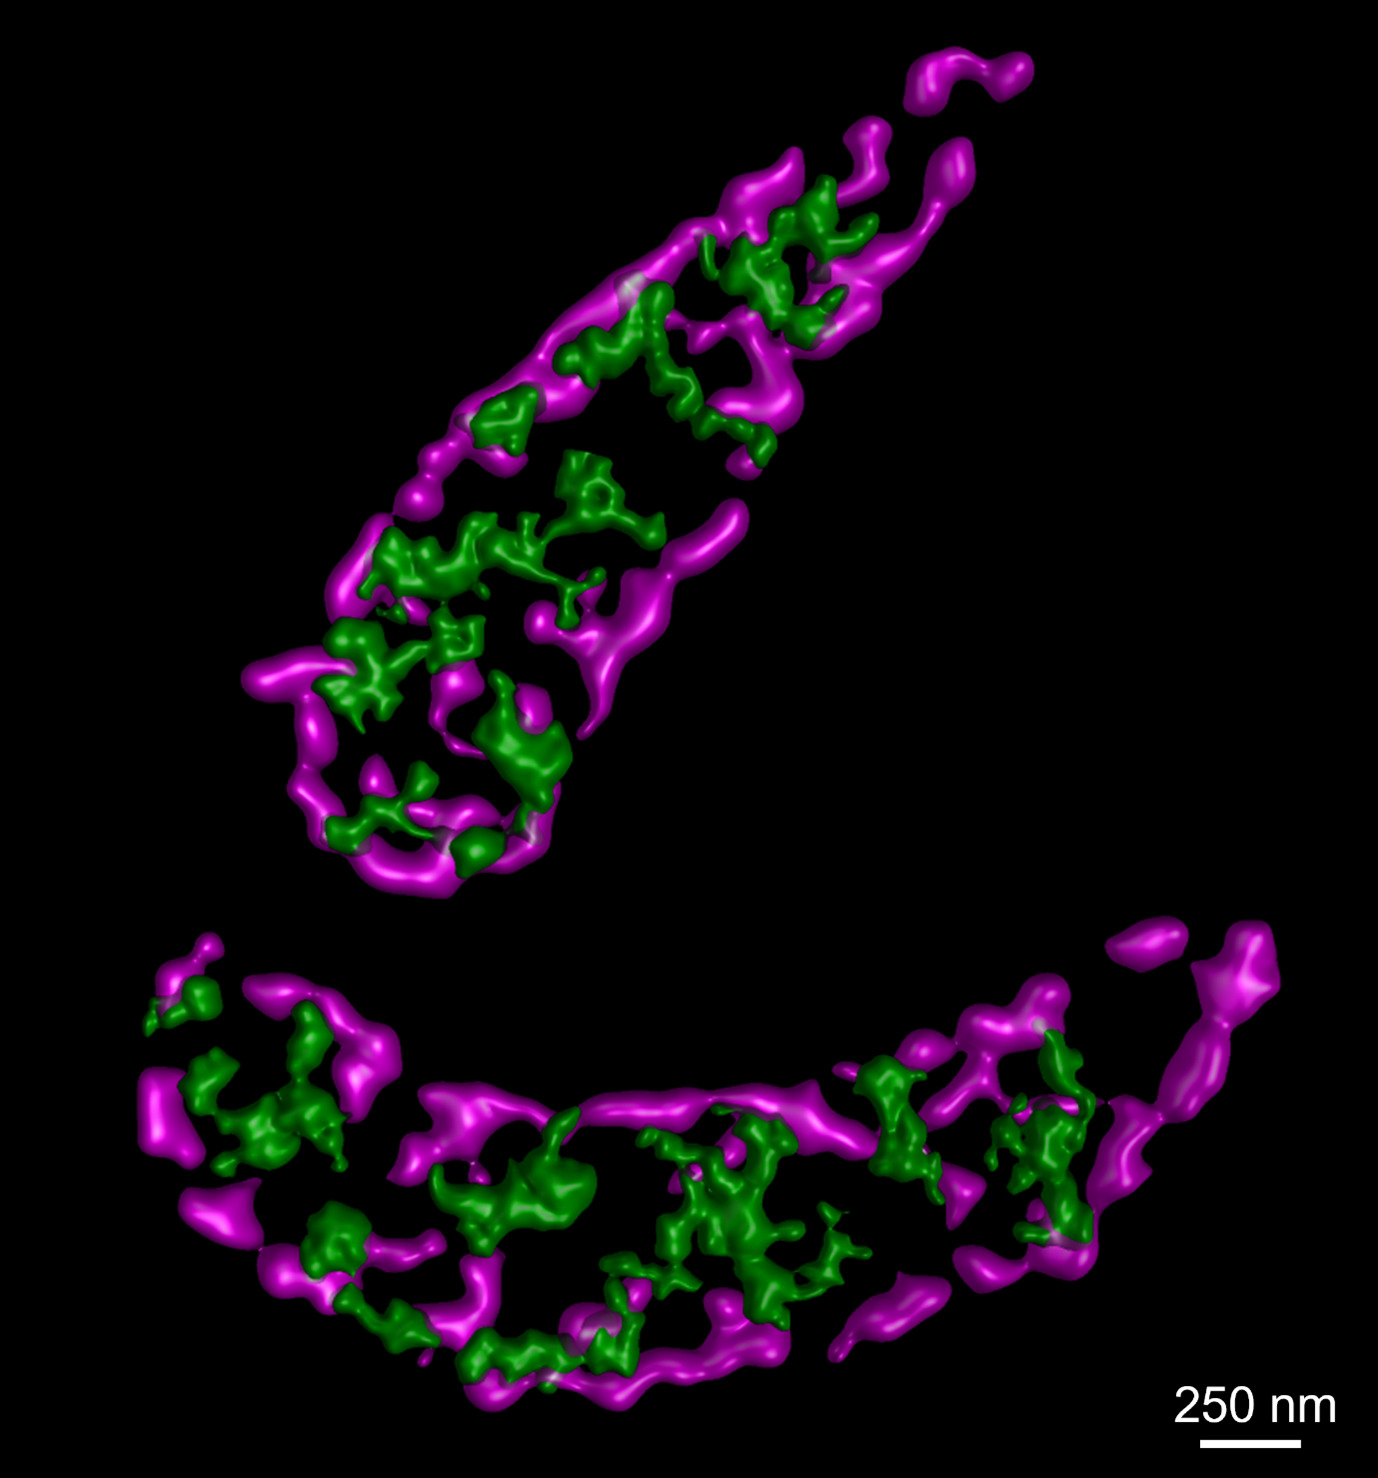 Dr. Rolando Berlinguer Palmini and Dr. Matt Zorkau Best Mitochondria Image